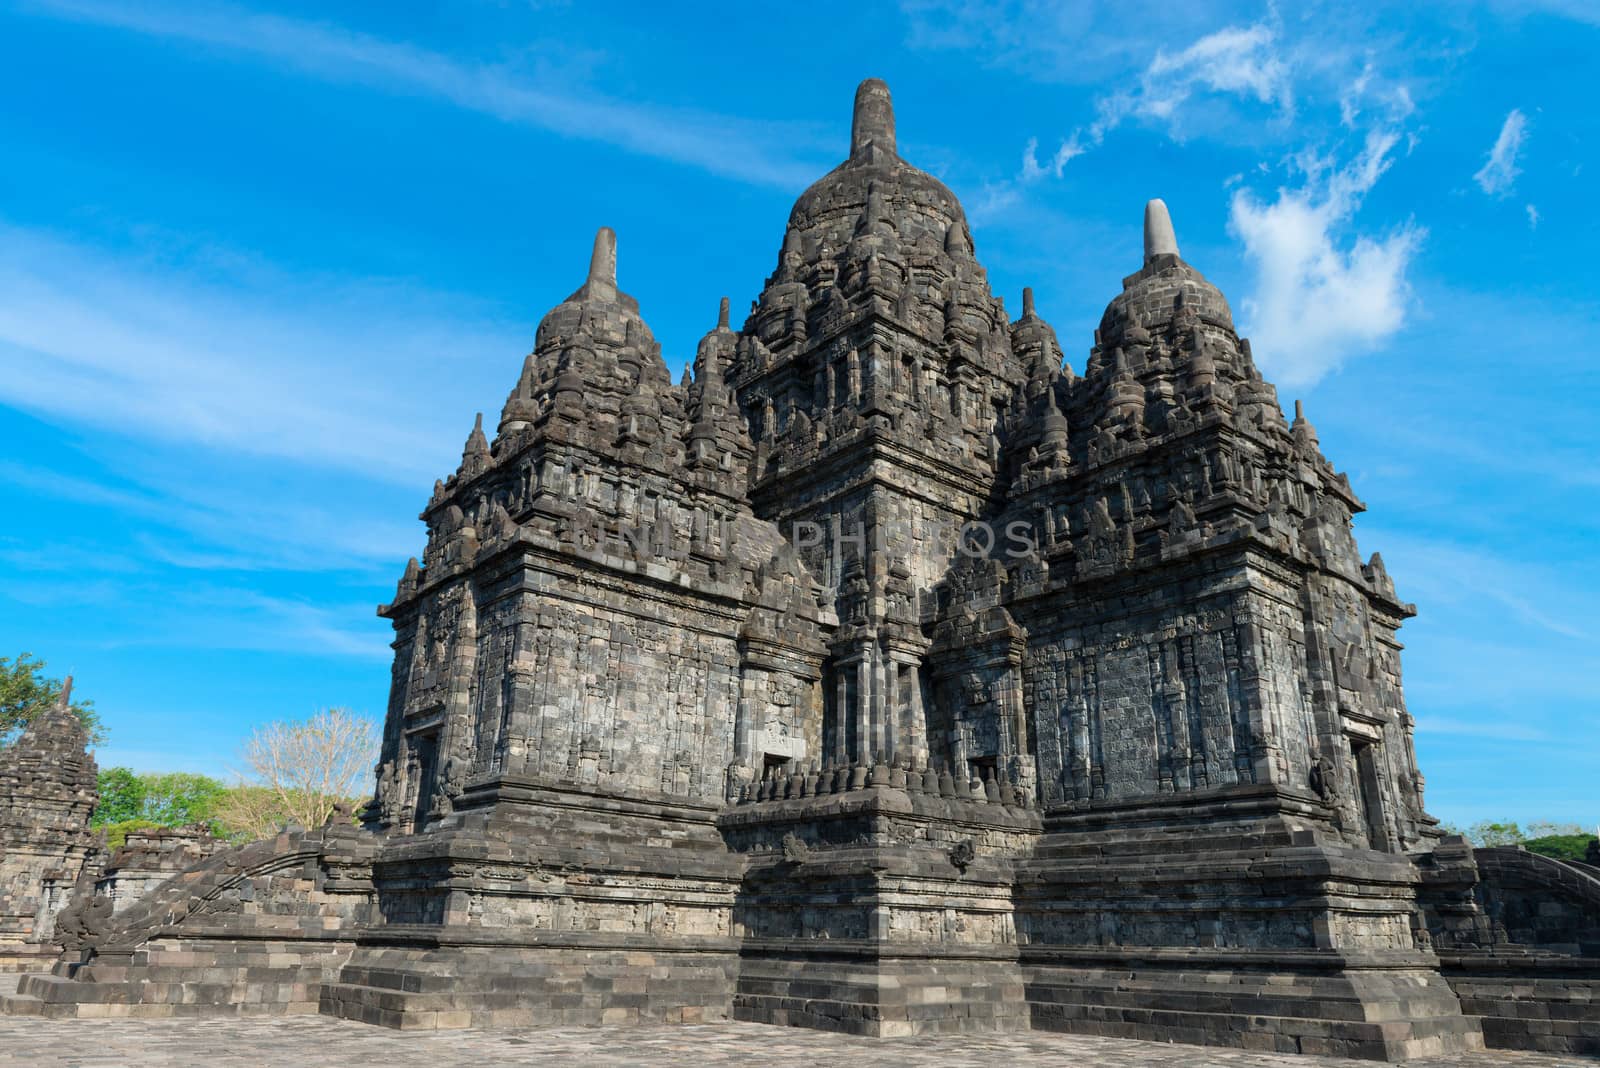 Candi Sewu Buddhist complex in Java, Indonesia by iryna_rasko